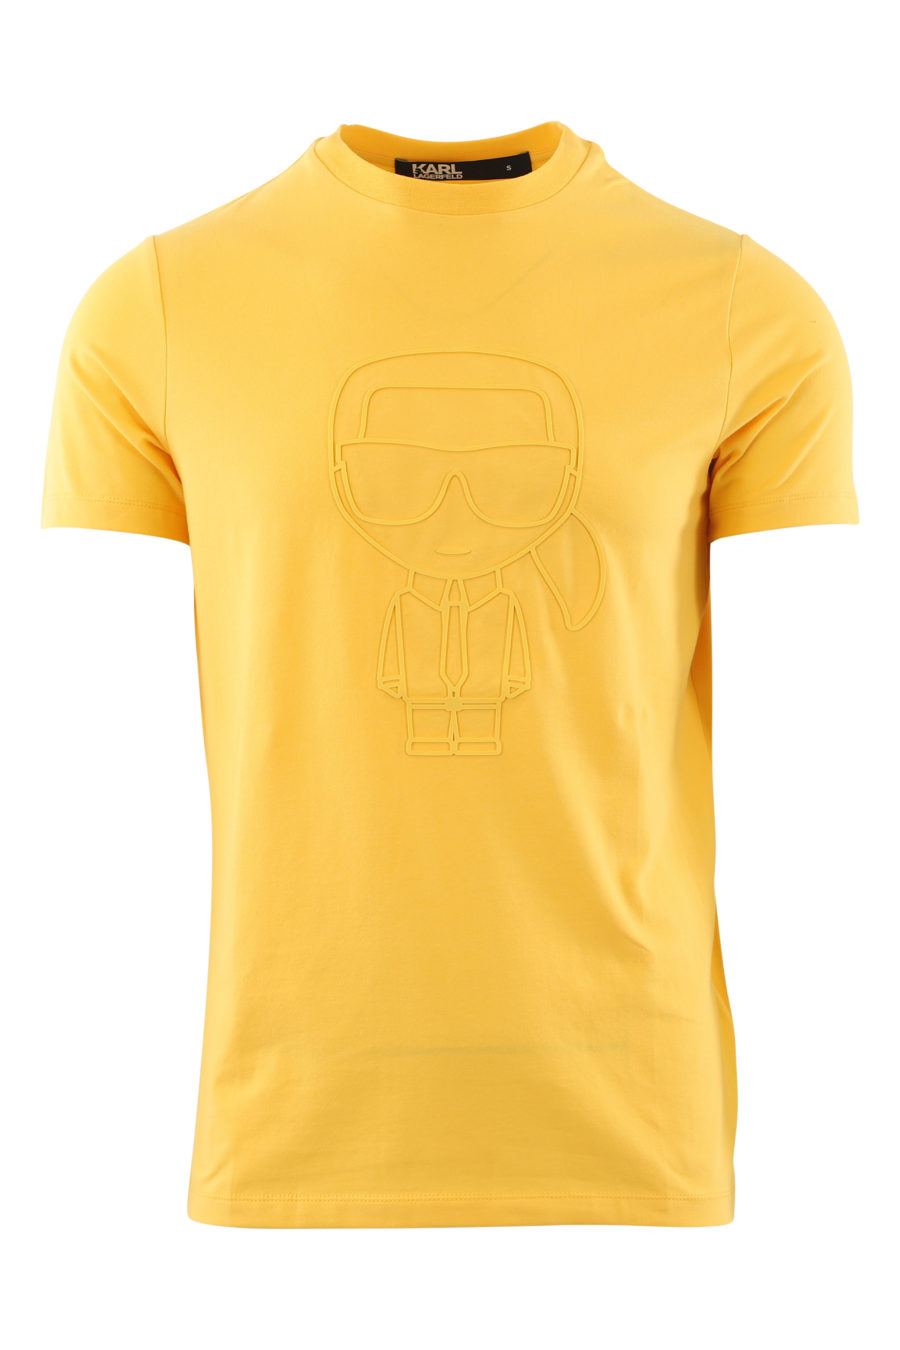 Camiseta amarilla con logo de goma amarillo - IMG 6491